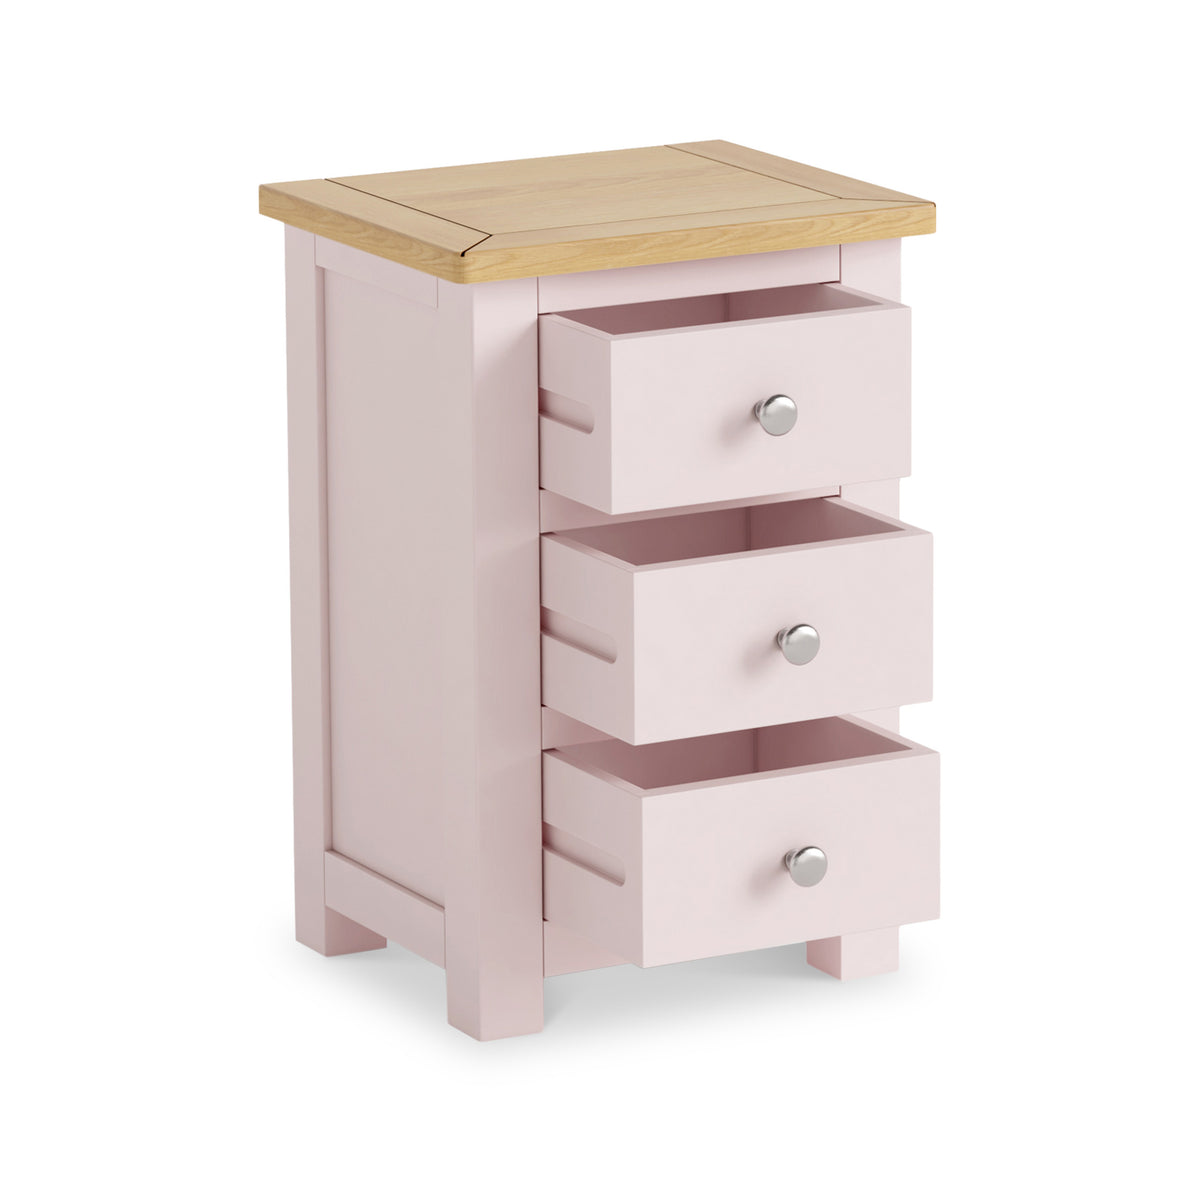 Duchy Dorchester Pink 3 Drawer Nightstand with Oak Top